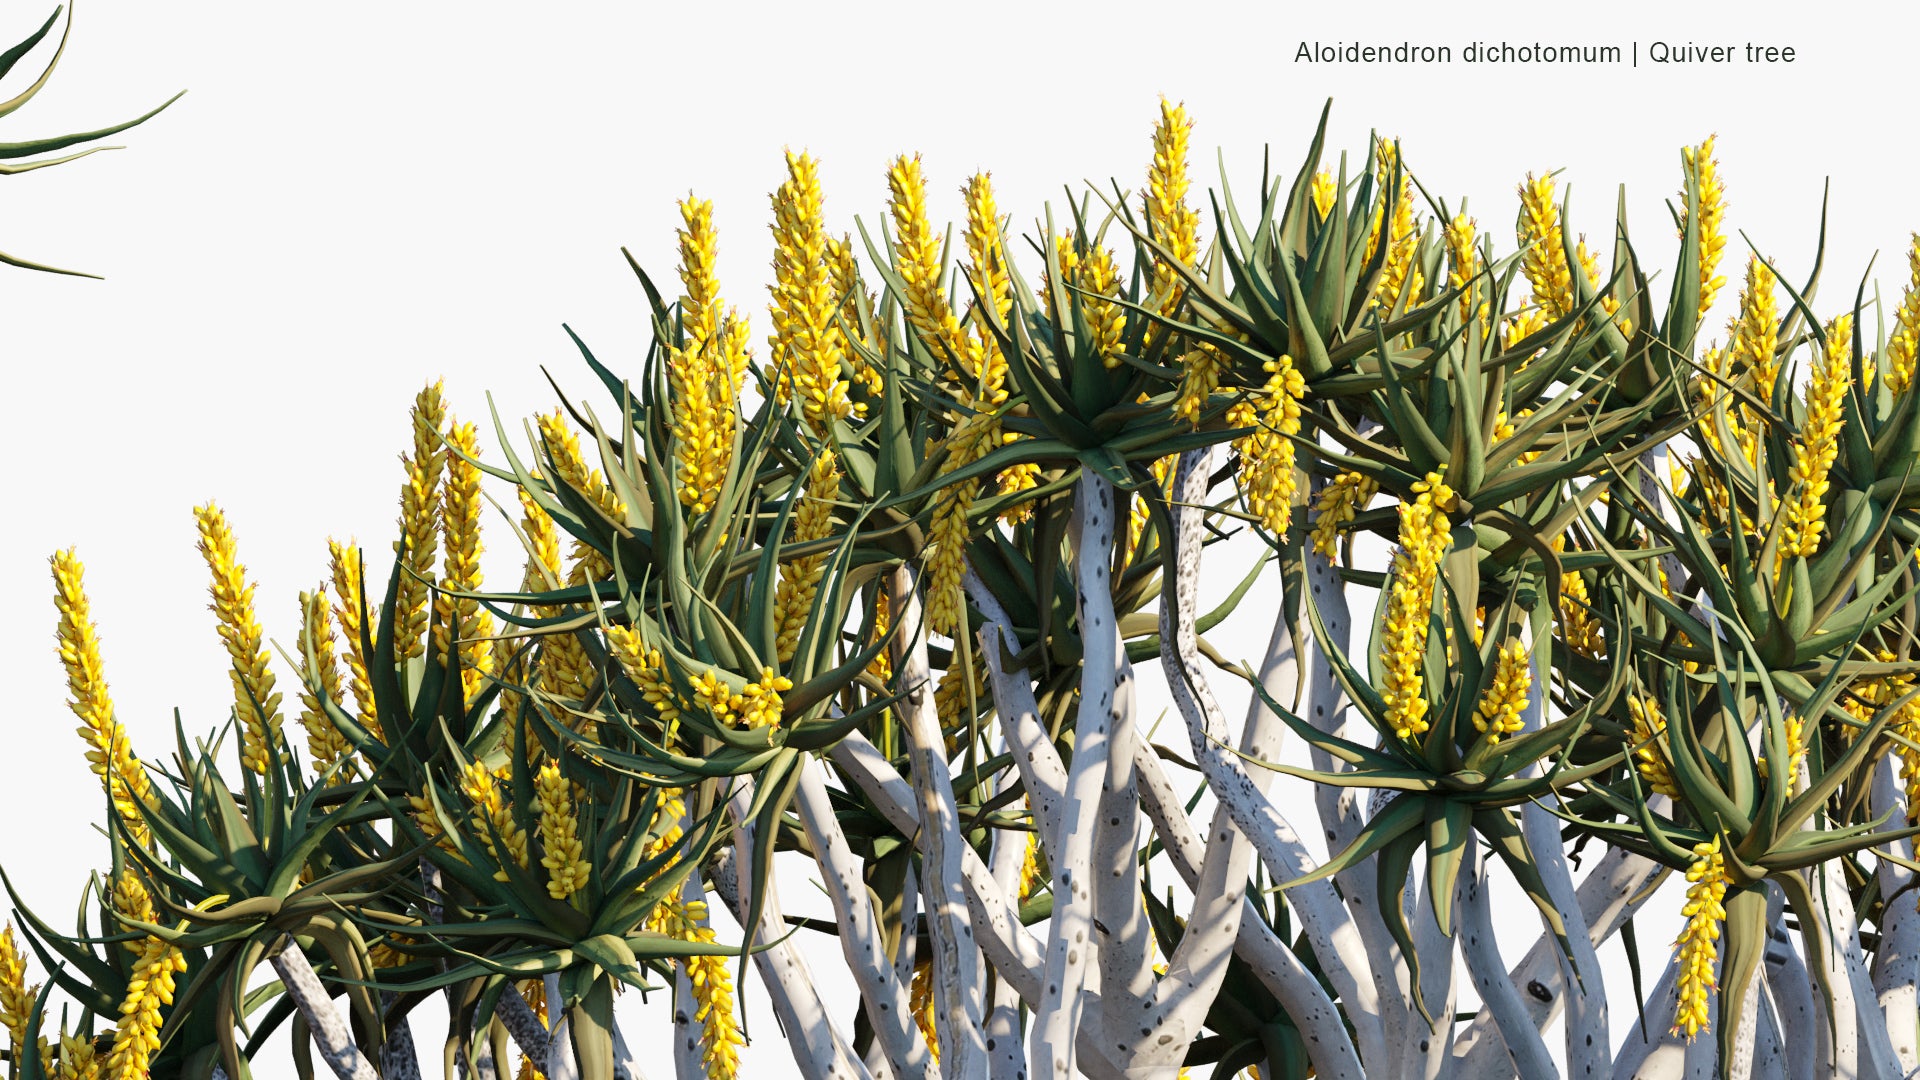 Aloidendron Dichotomum - Aloe Dichotoma, Quiver Tree, Kokerboom (3D Model)